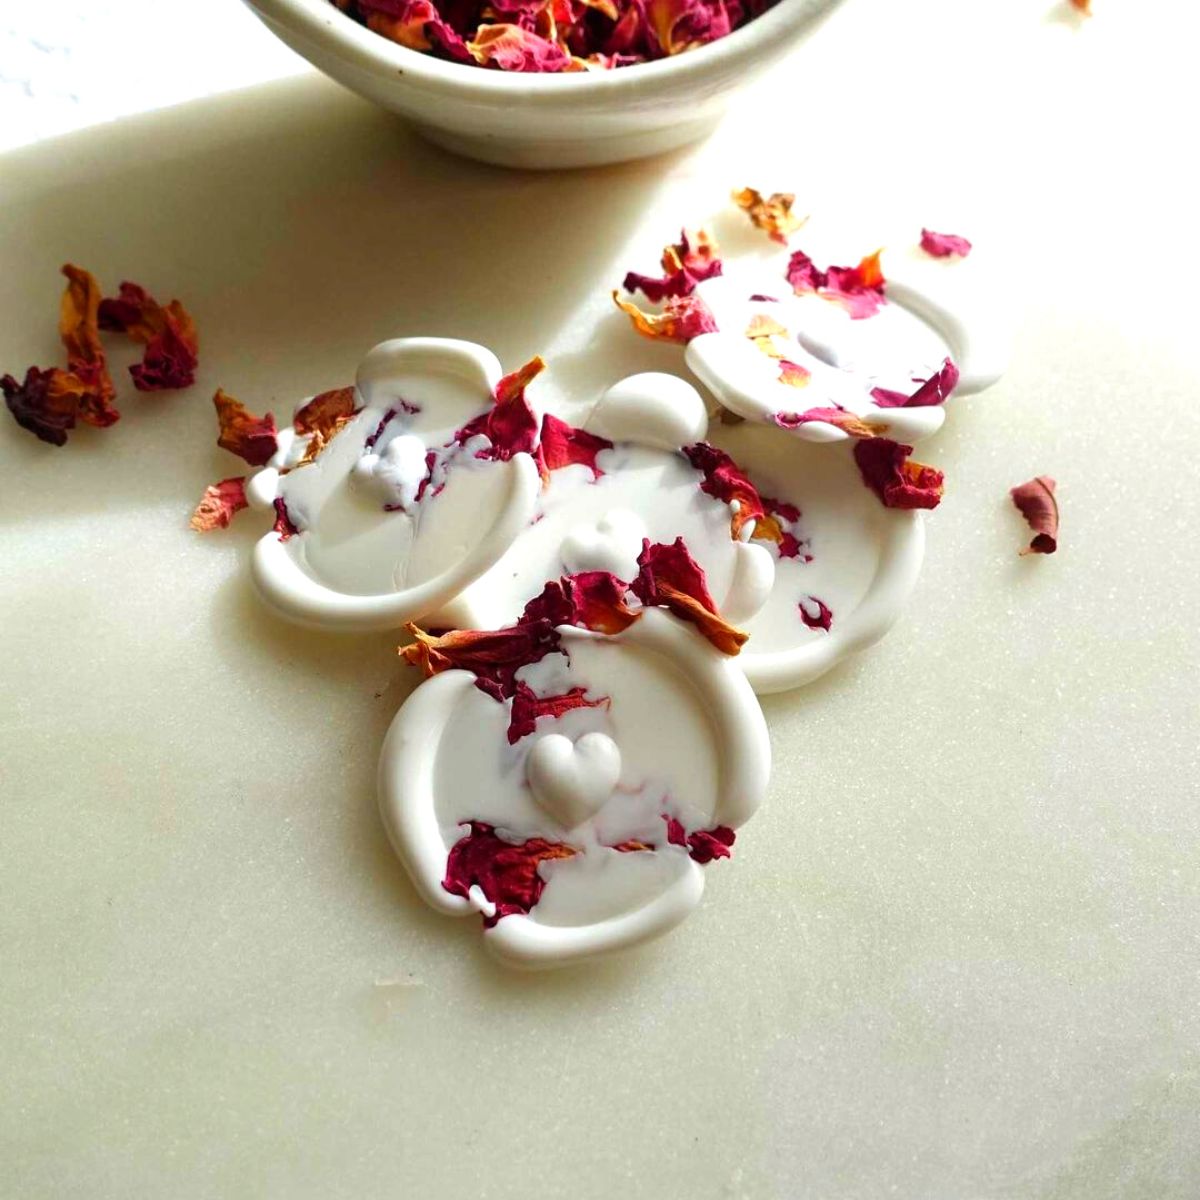 Wax sealing using dried flowers by Fiona Ariva